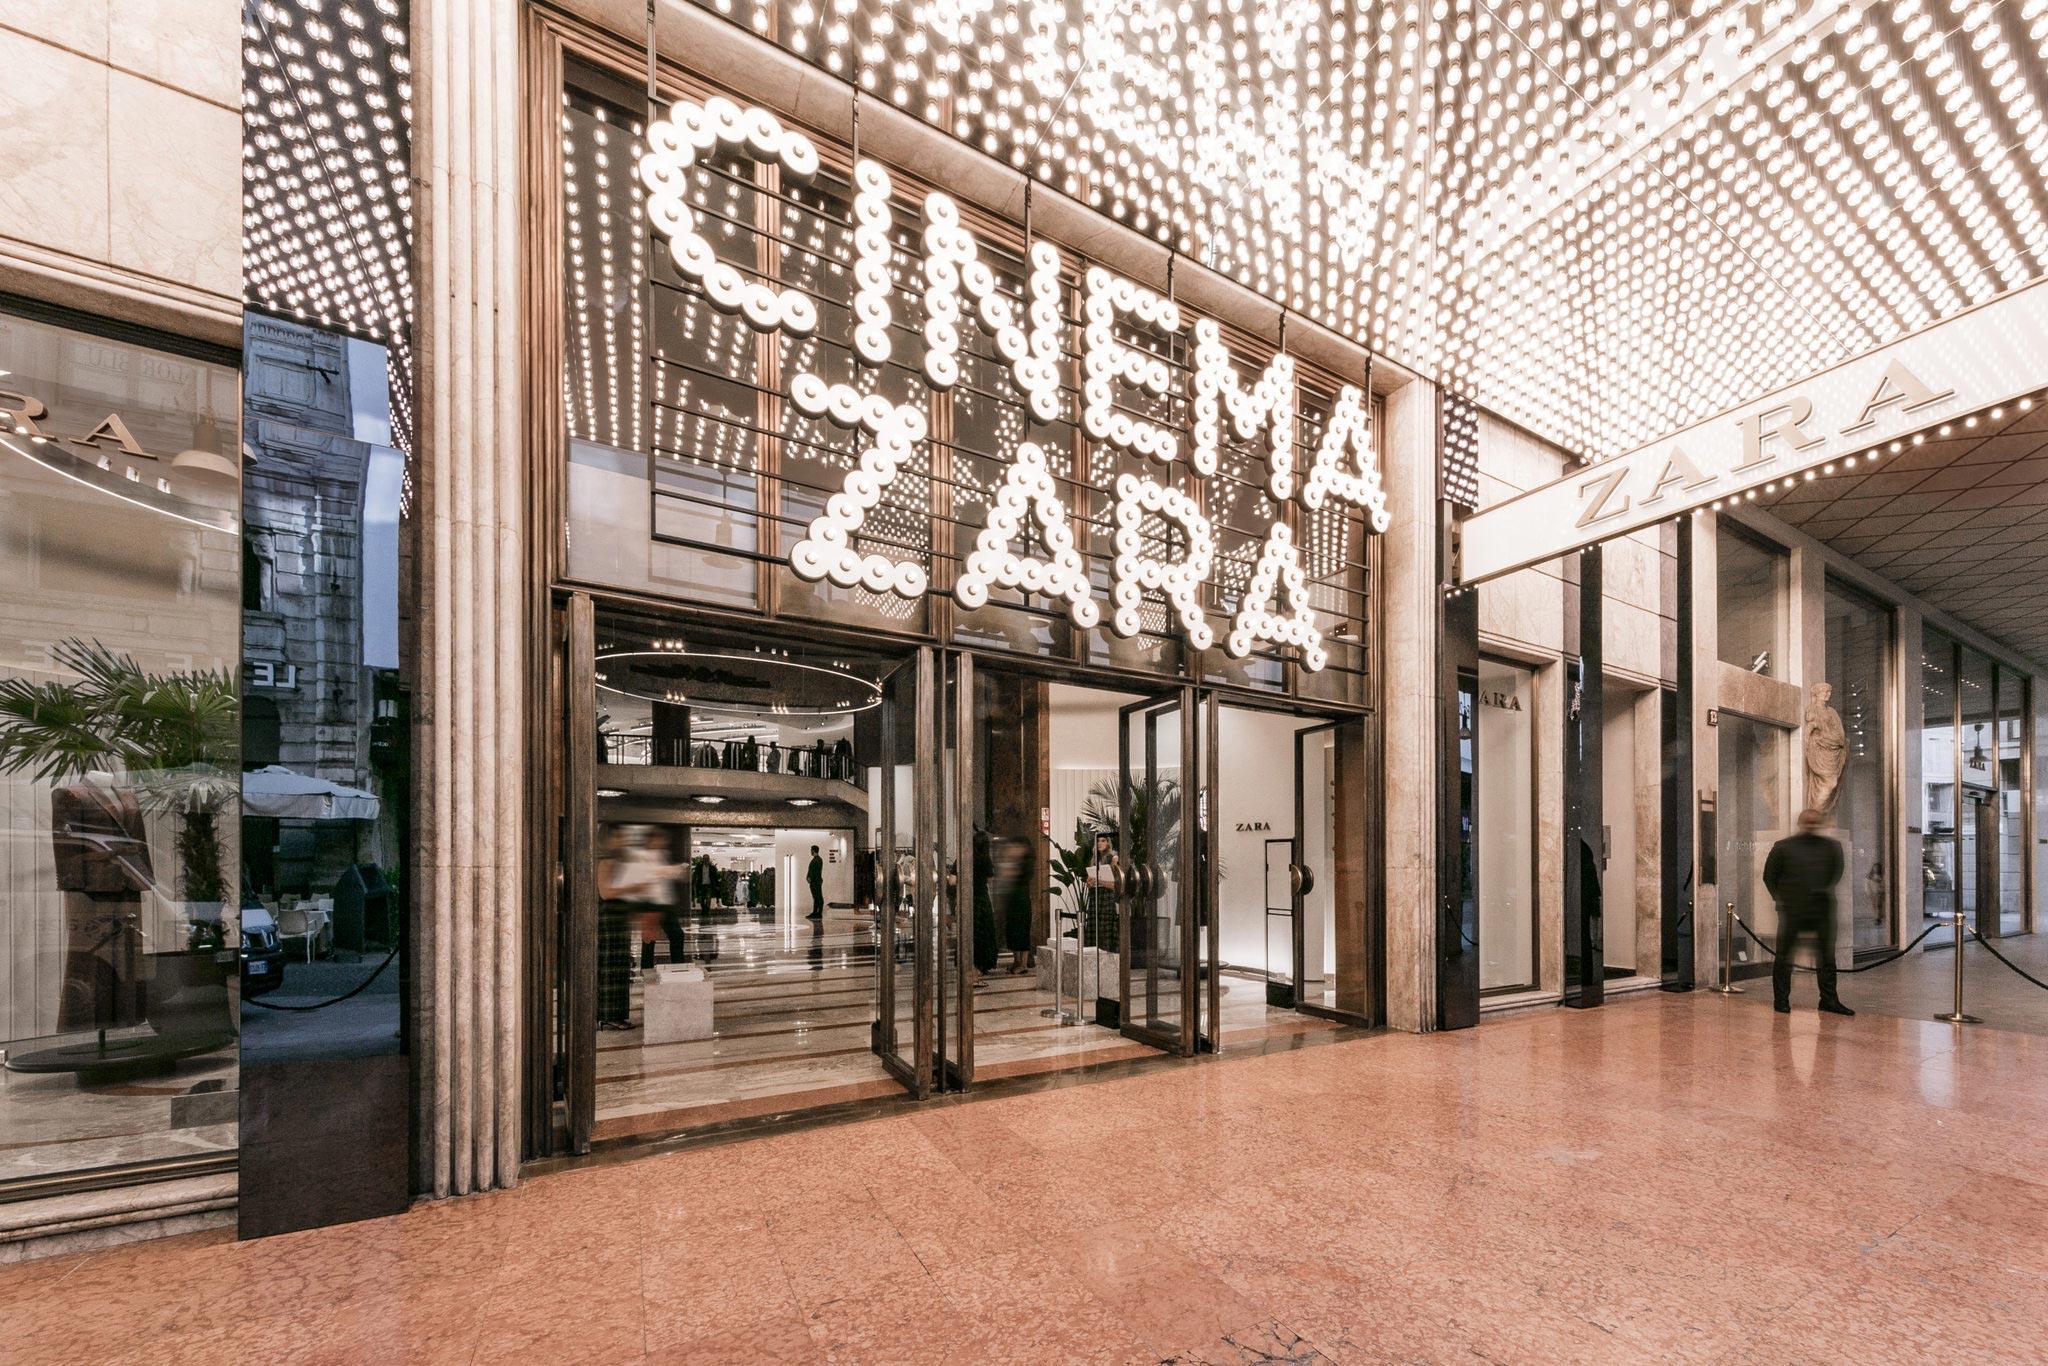 Cinema Zara Milan - Spectacular new concept ideas for technology lifestyle retail interior design.